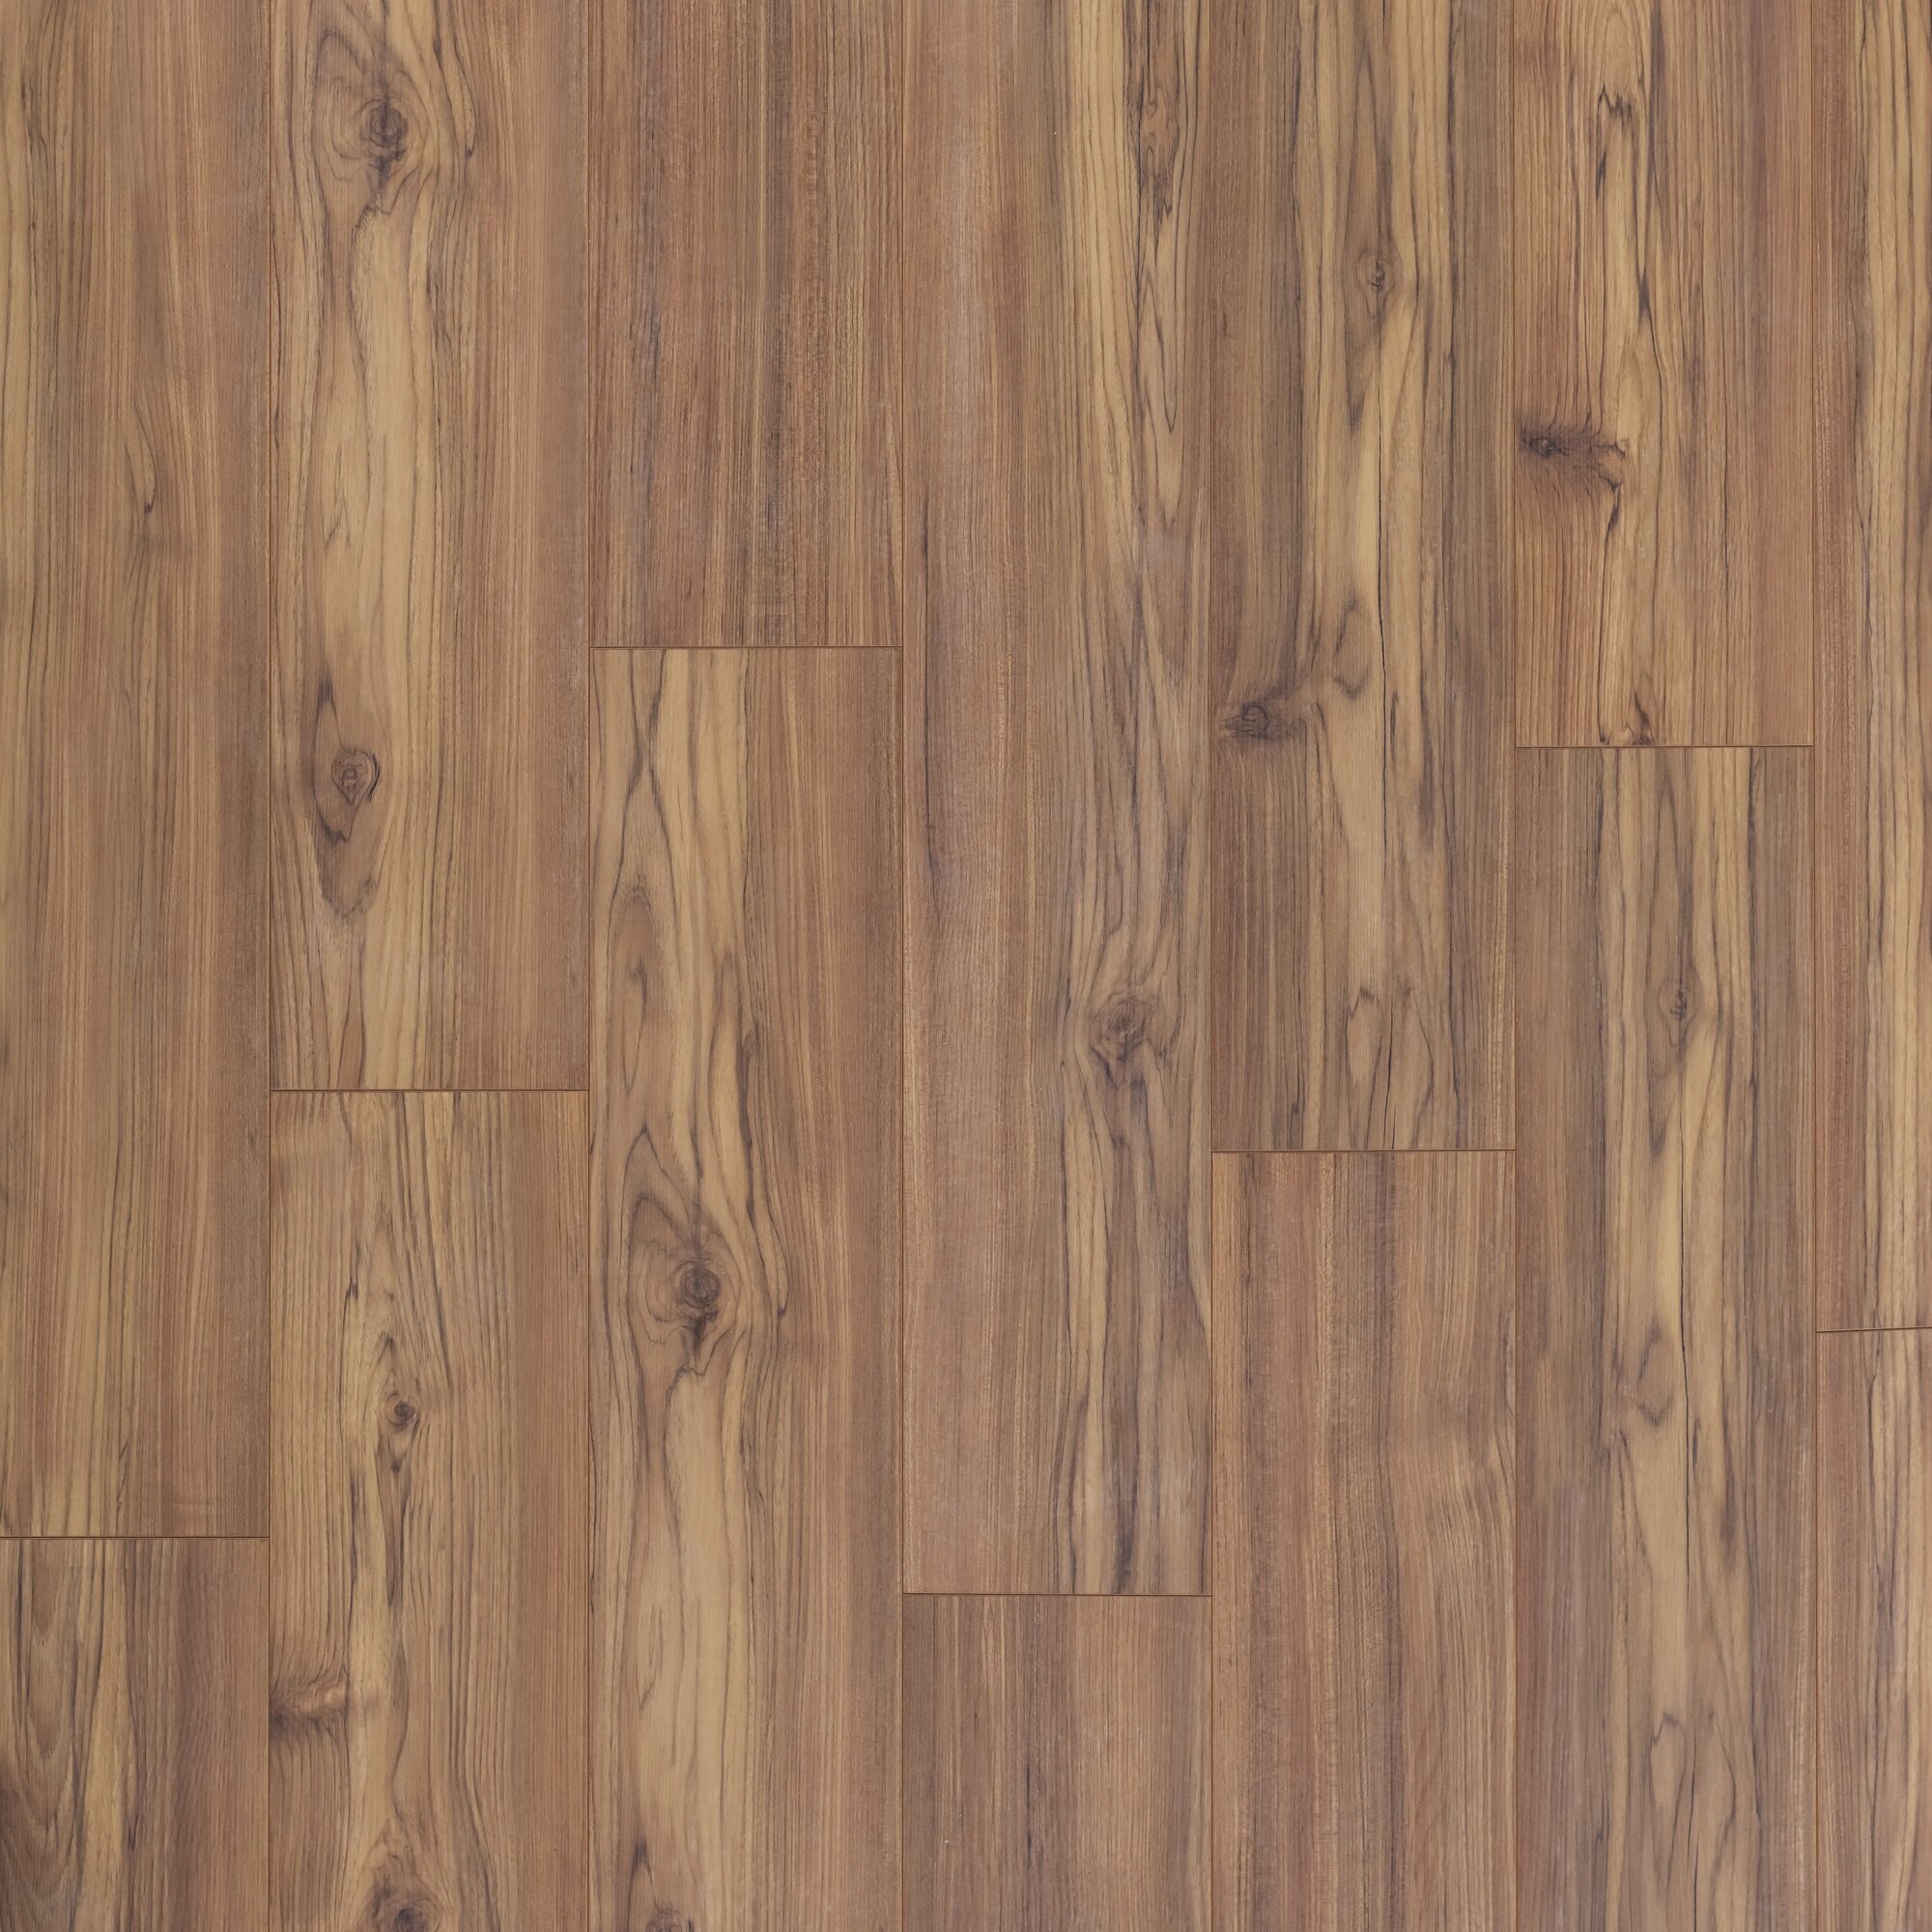 Pergo Xtra x x 10mm Laminate Flooring & Reviews | Wayfair